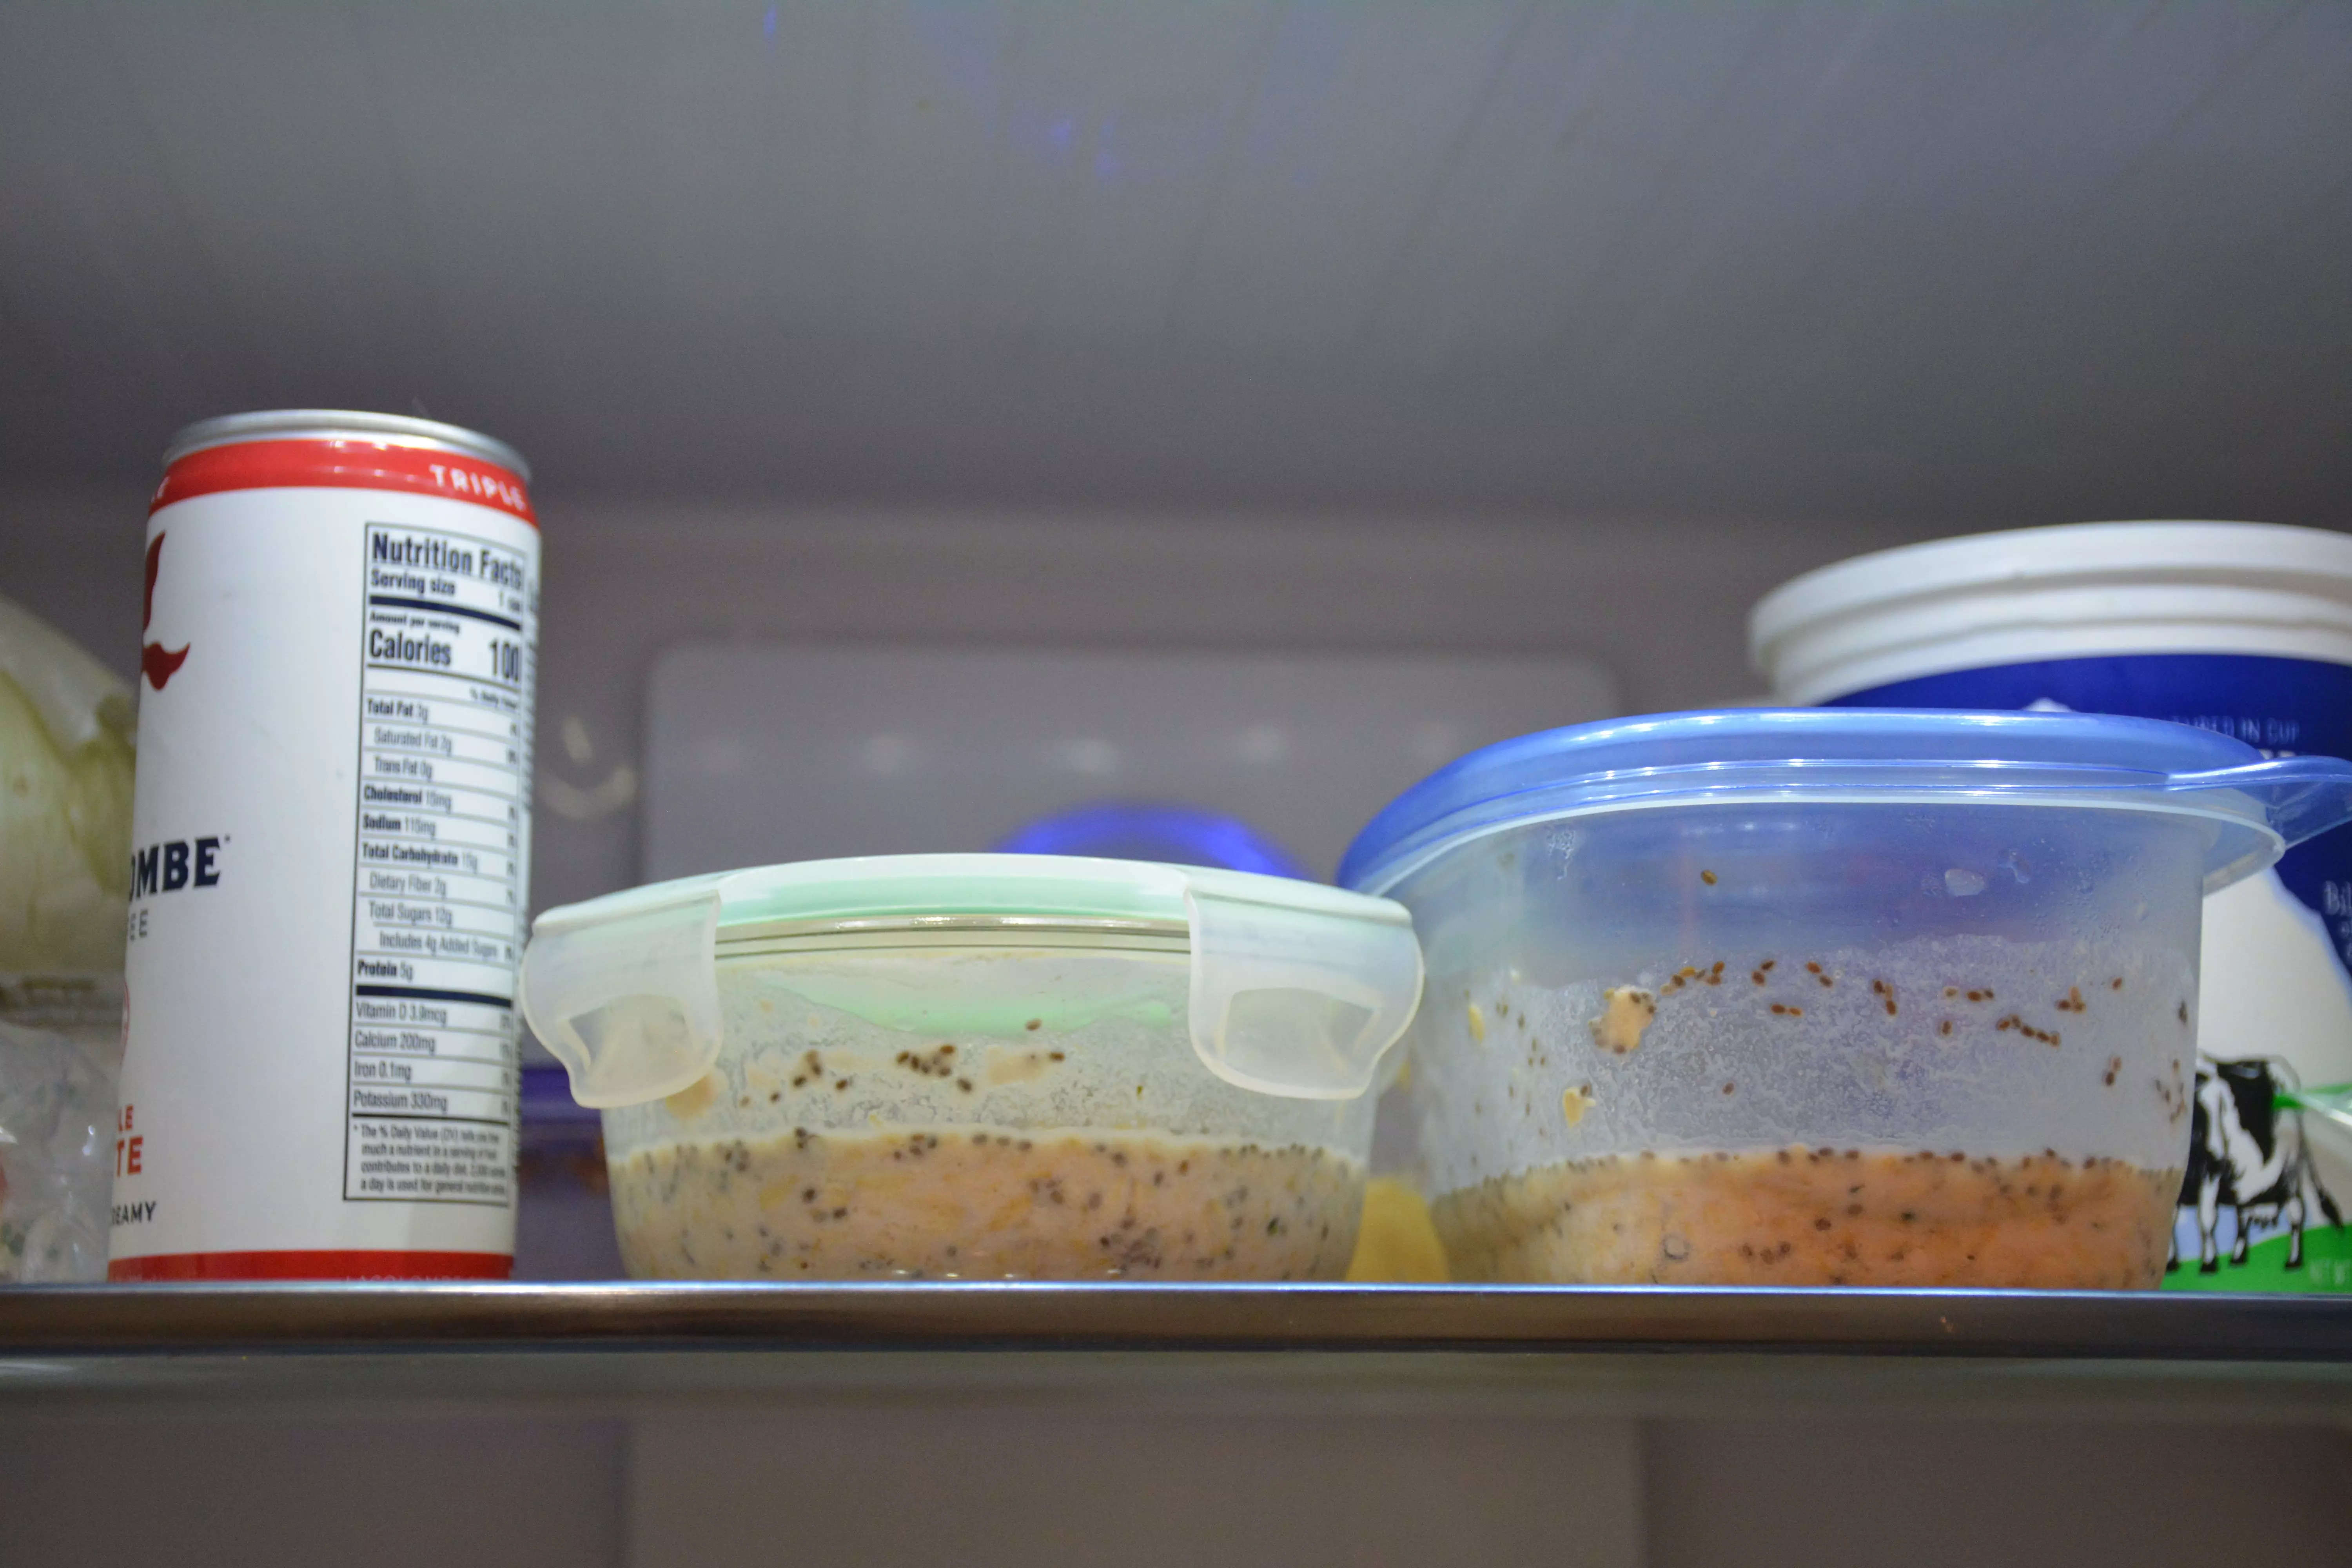 Two Tupperware of overnight oats on the upper shelf of the fridge.